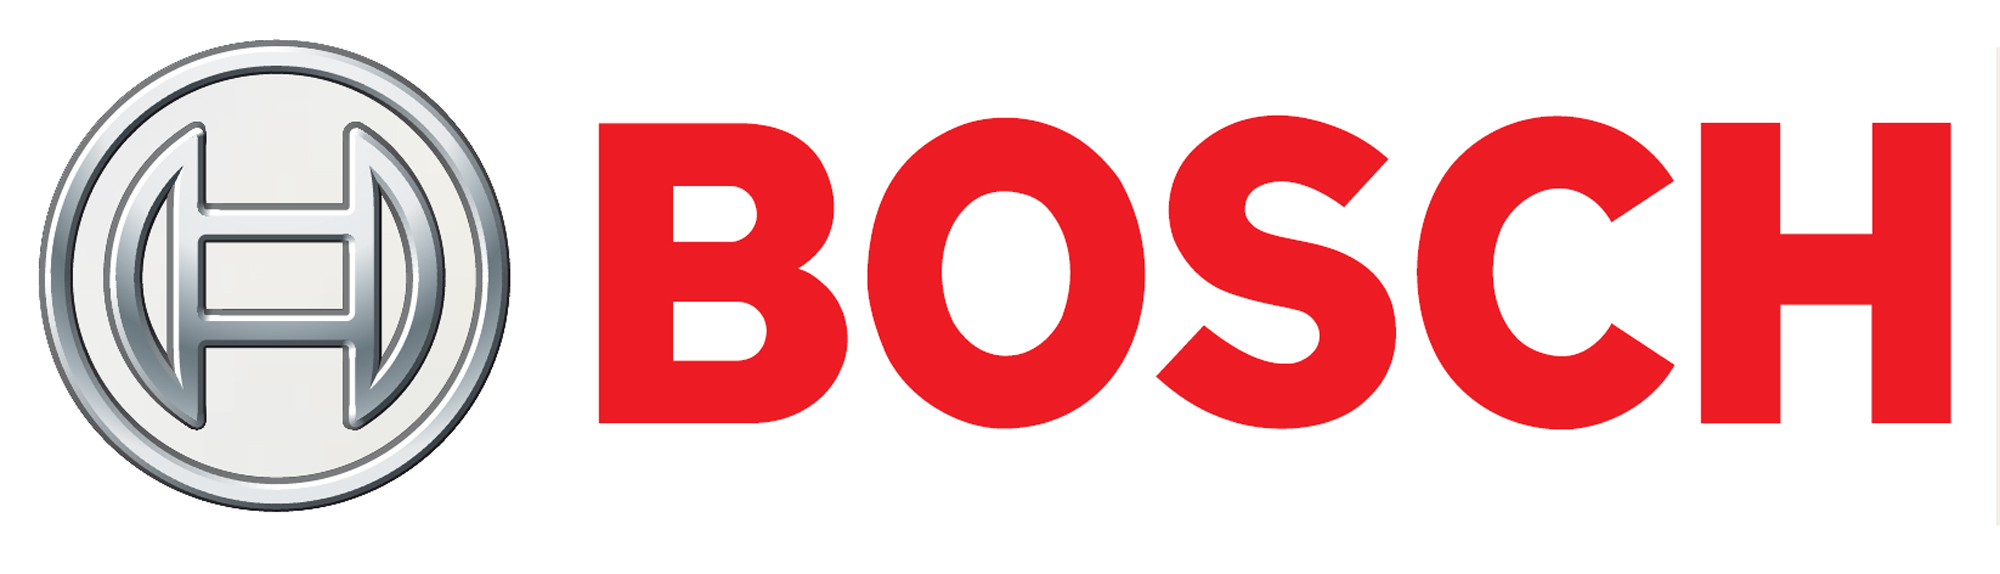 DUMOULIN  - logo Bosch